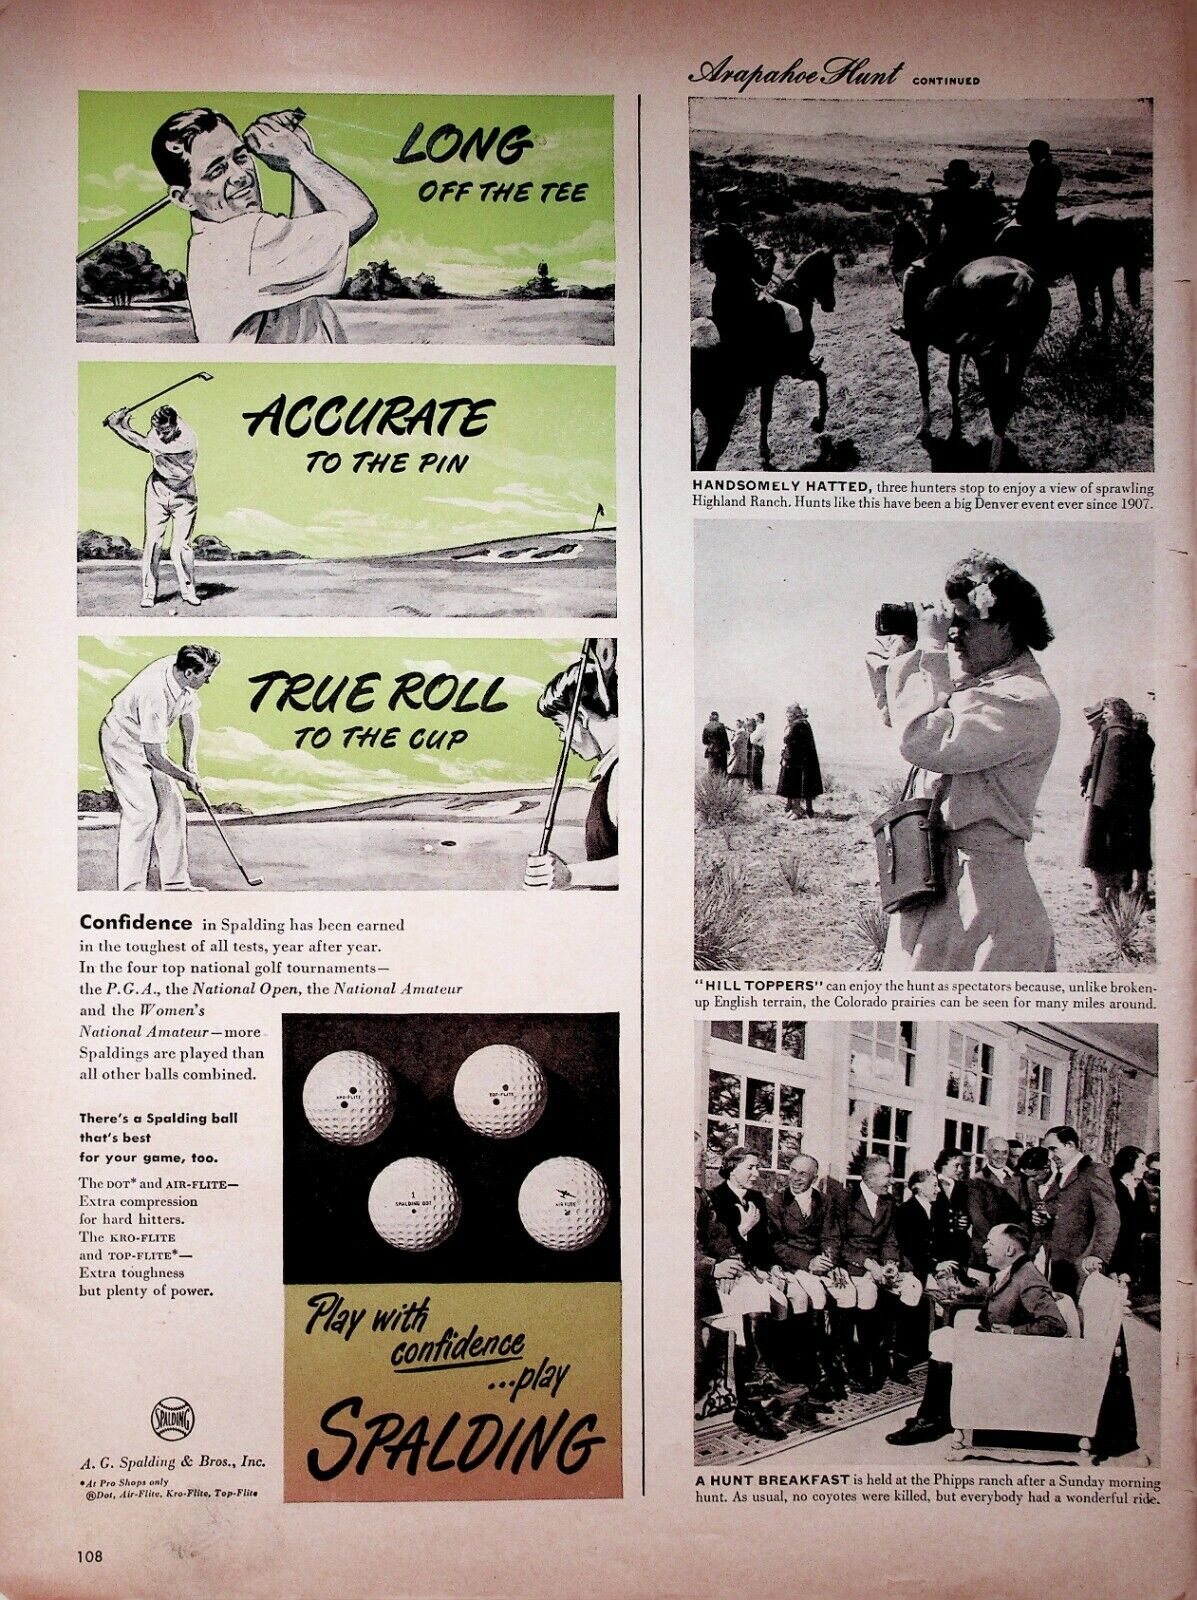 1949 Spalding Golf Balls - DOT, AIR-FLITE, KRO-FLITE, TOP-FLITE - Vintage Ad